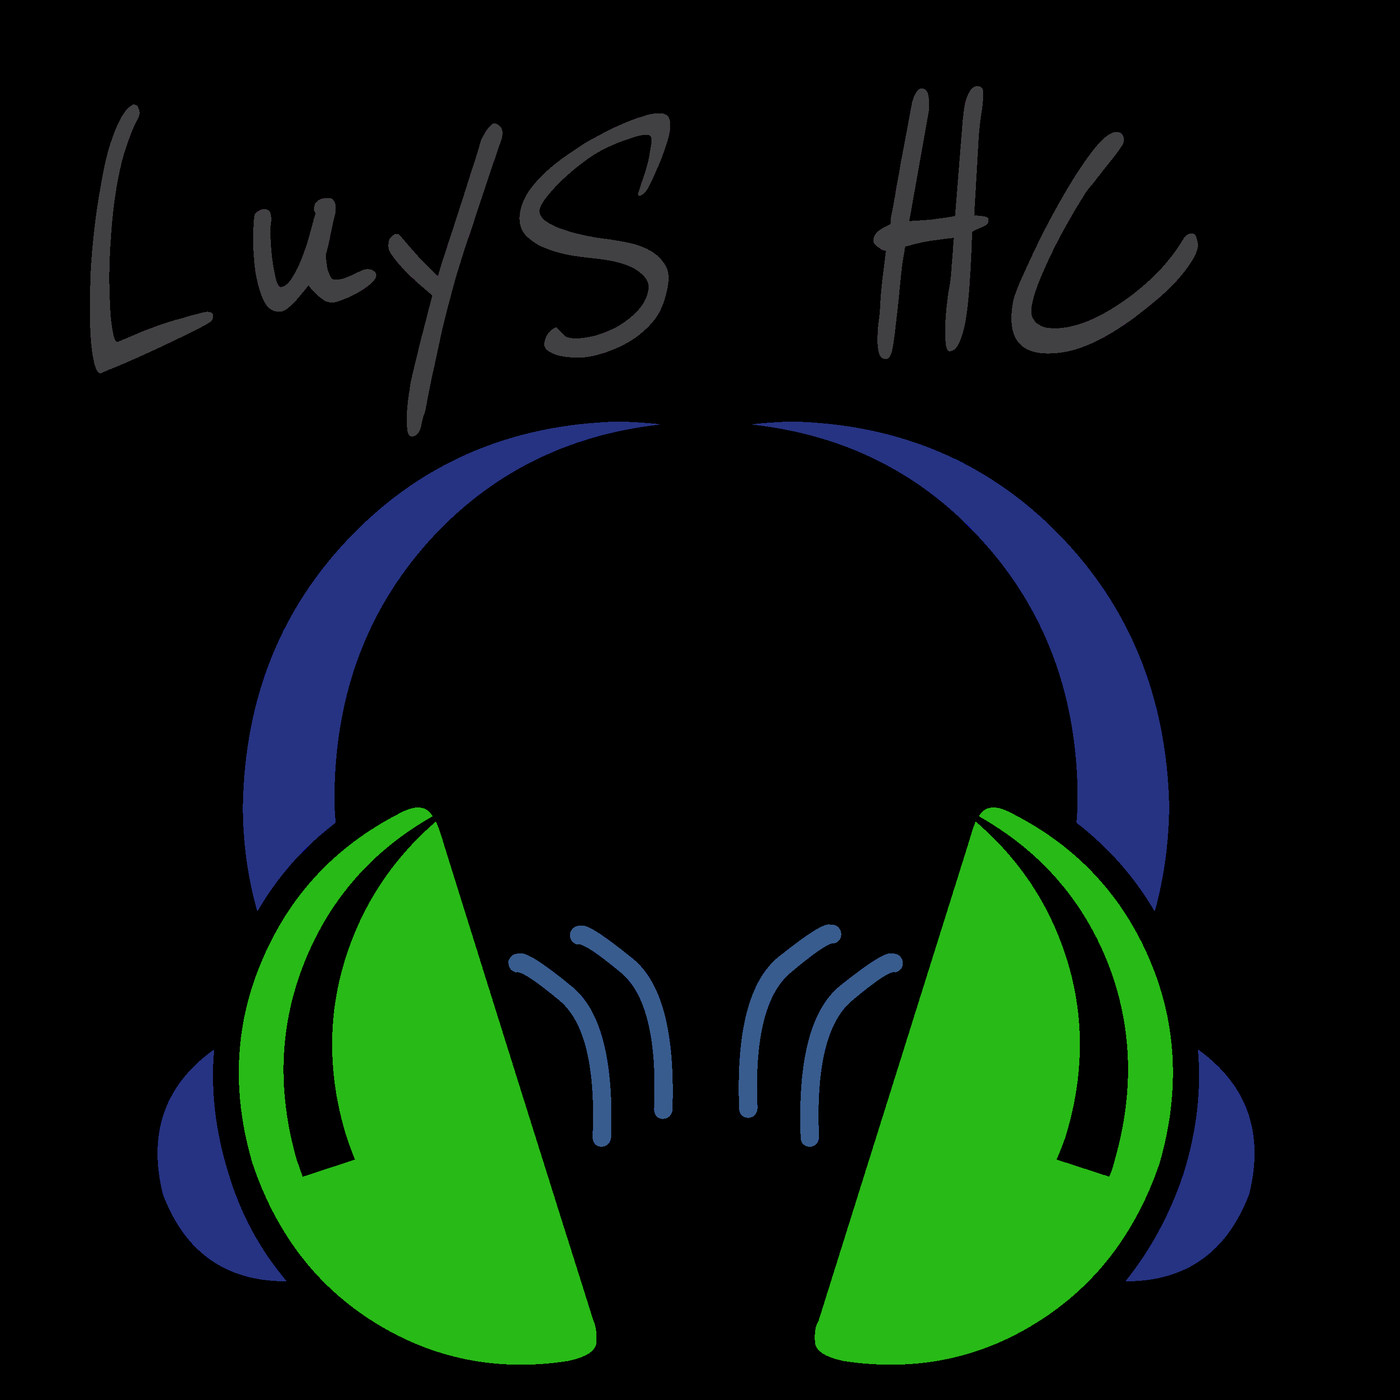 LuyS HC